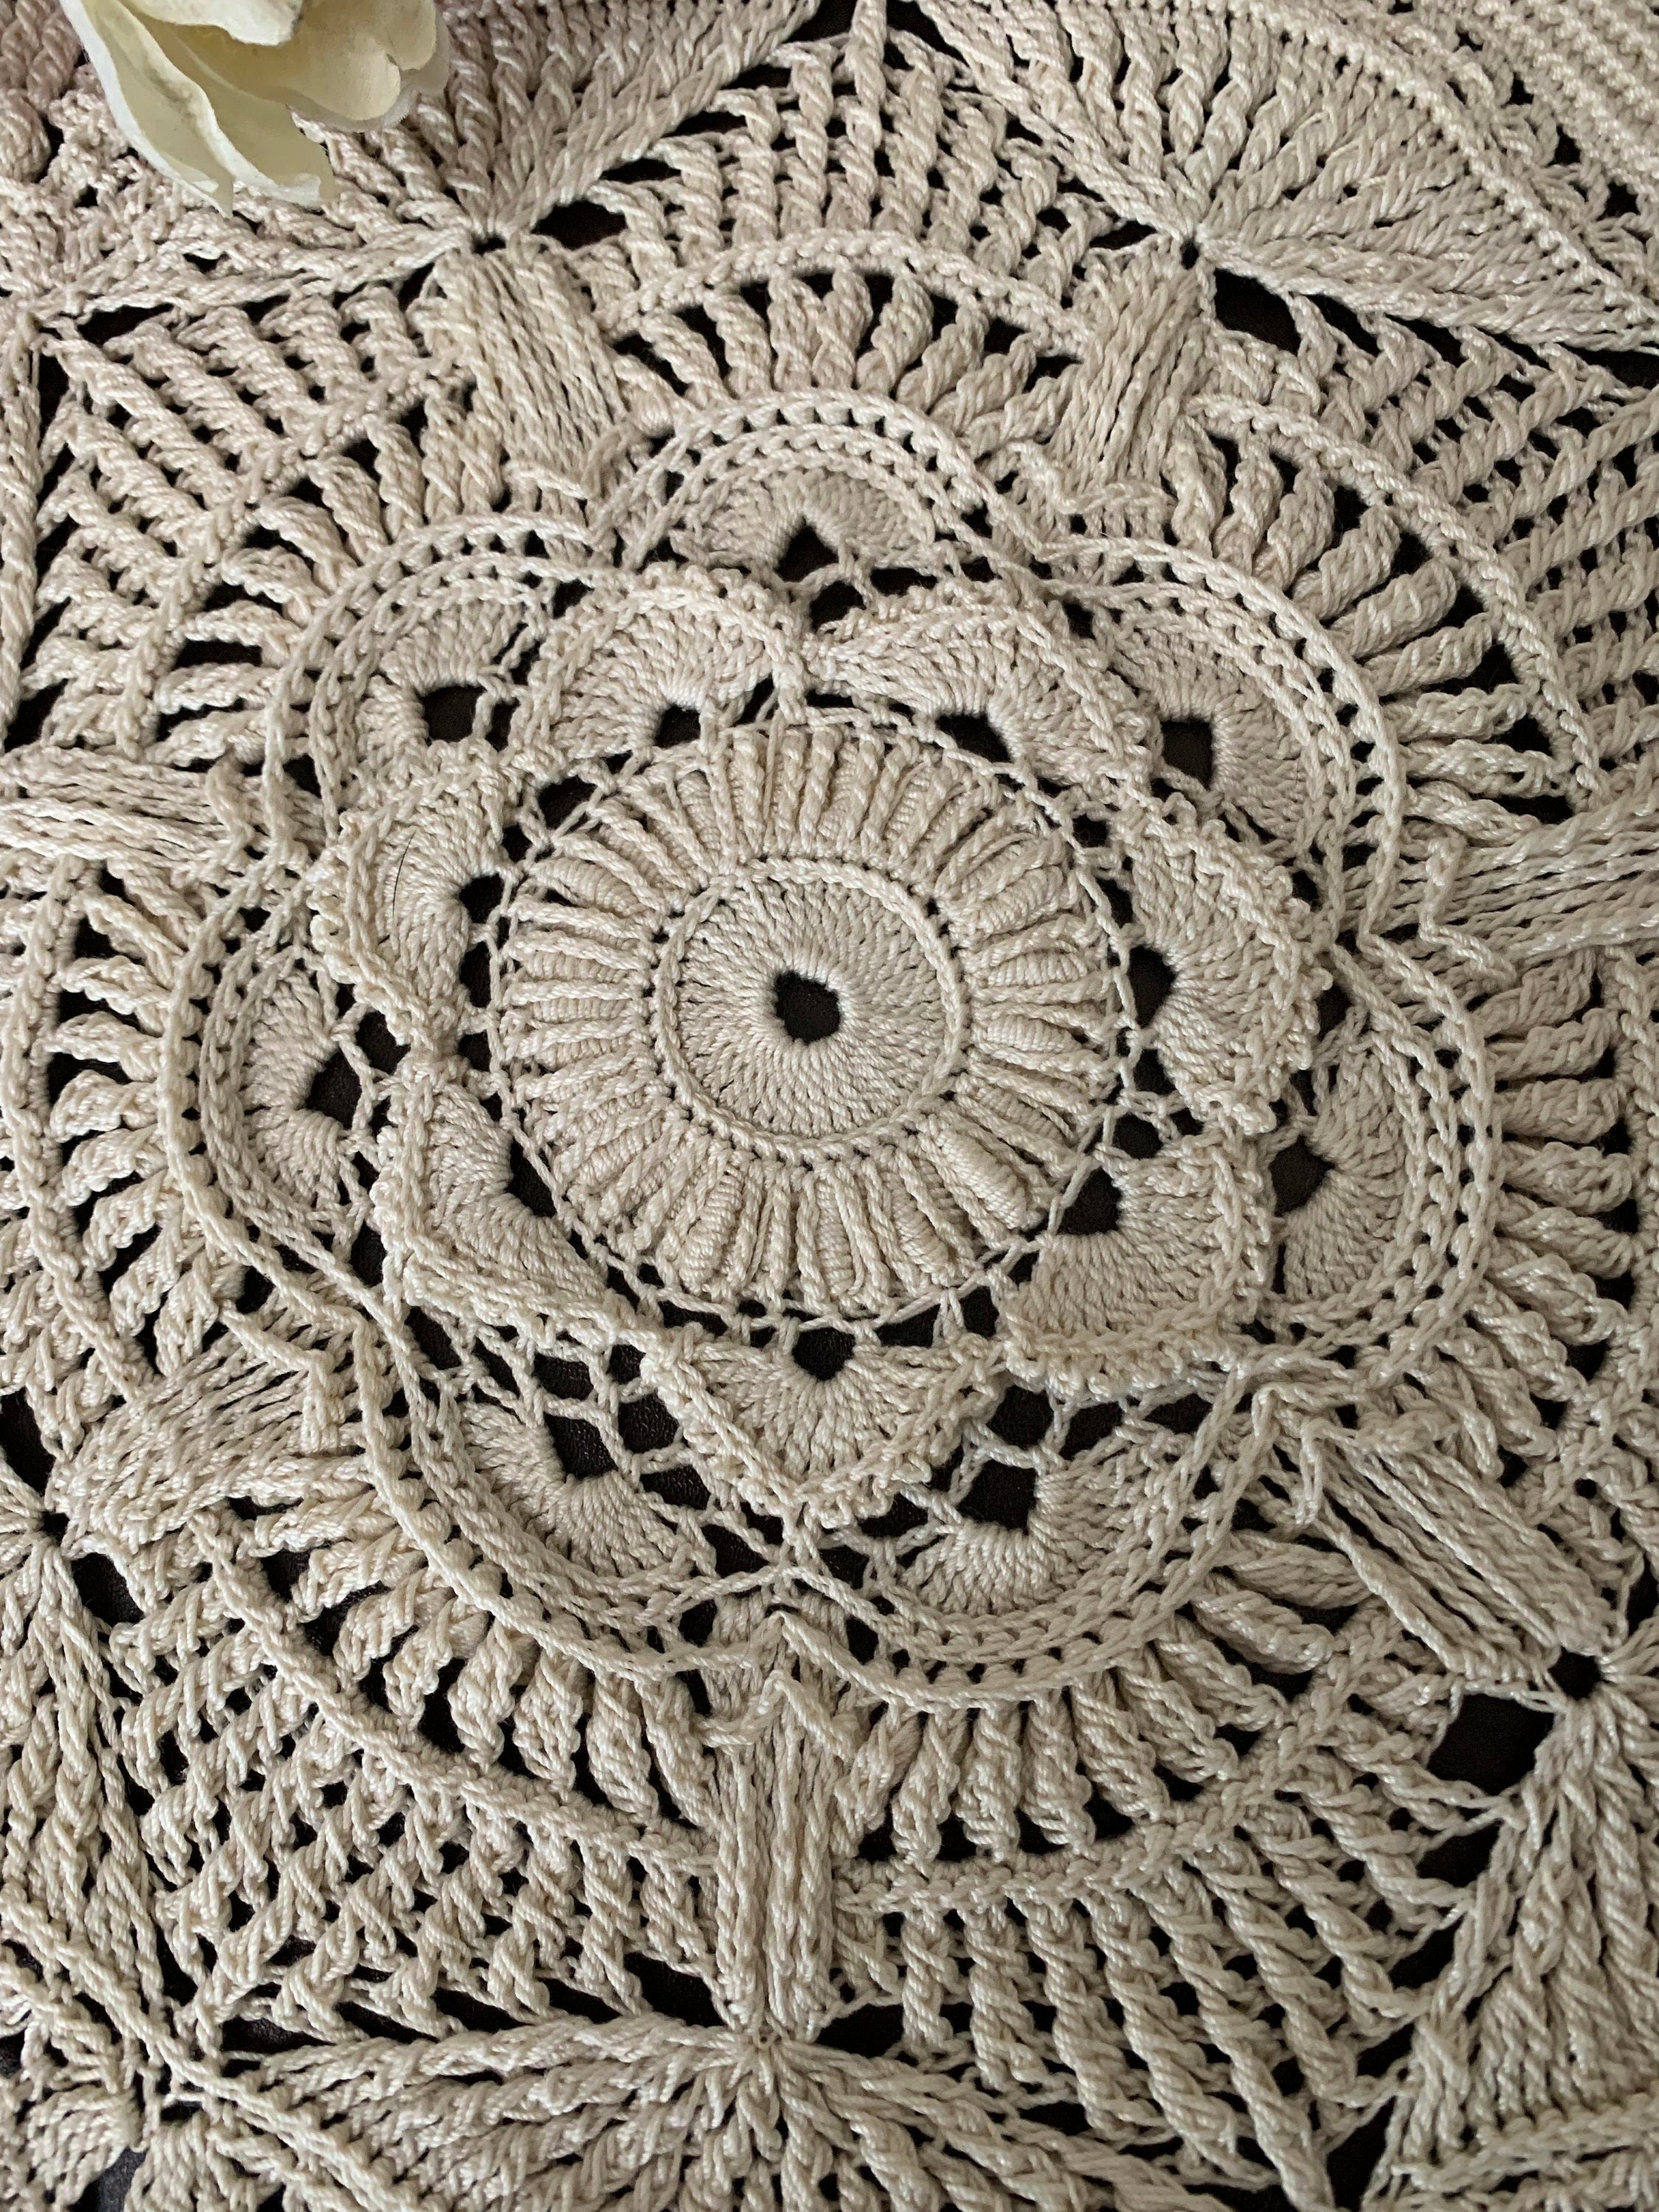 18” Textured Doily Off-White(Ecru)One-of-a-kind Crochet Doily-Heirloom Doily